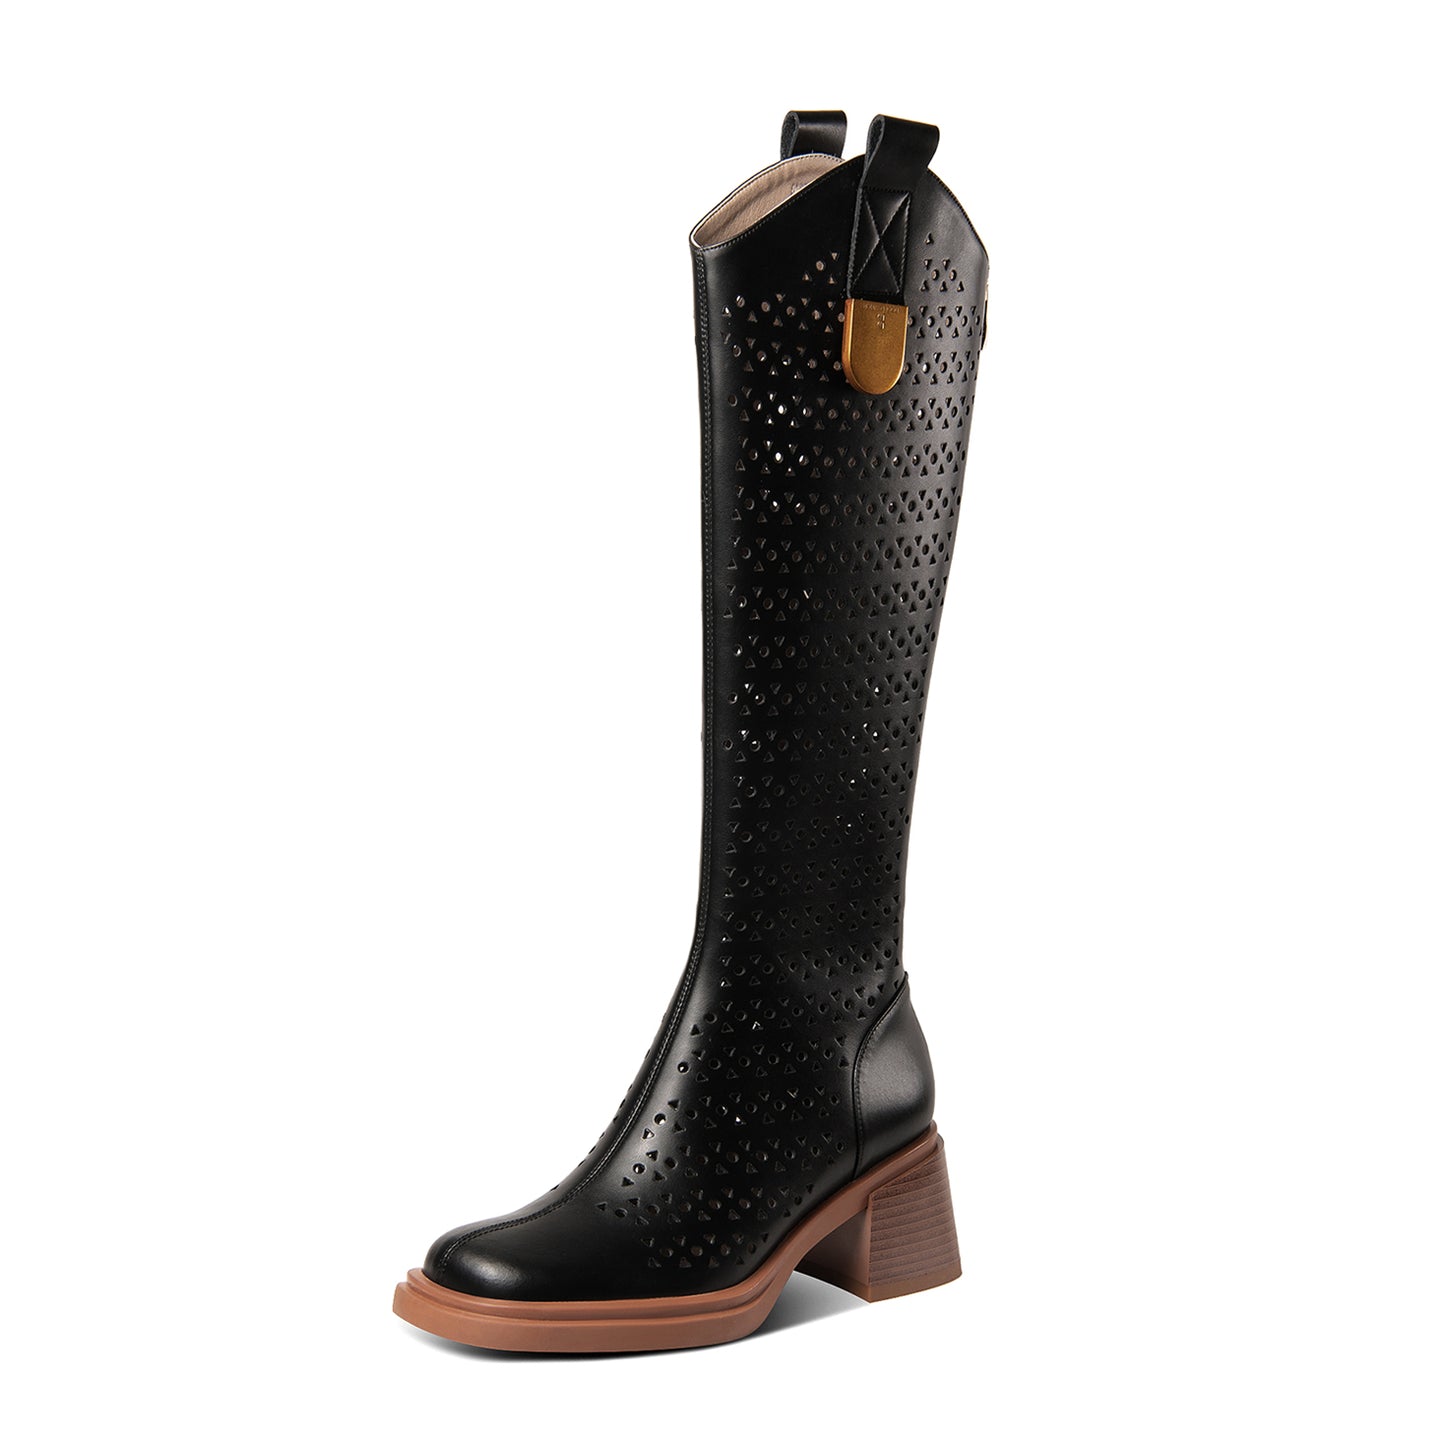 TinaCus Women's Handmade Genuine Leather Back Zip Up Block Heel Western Style Summer Knee High Boots